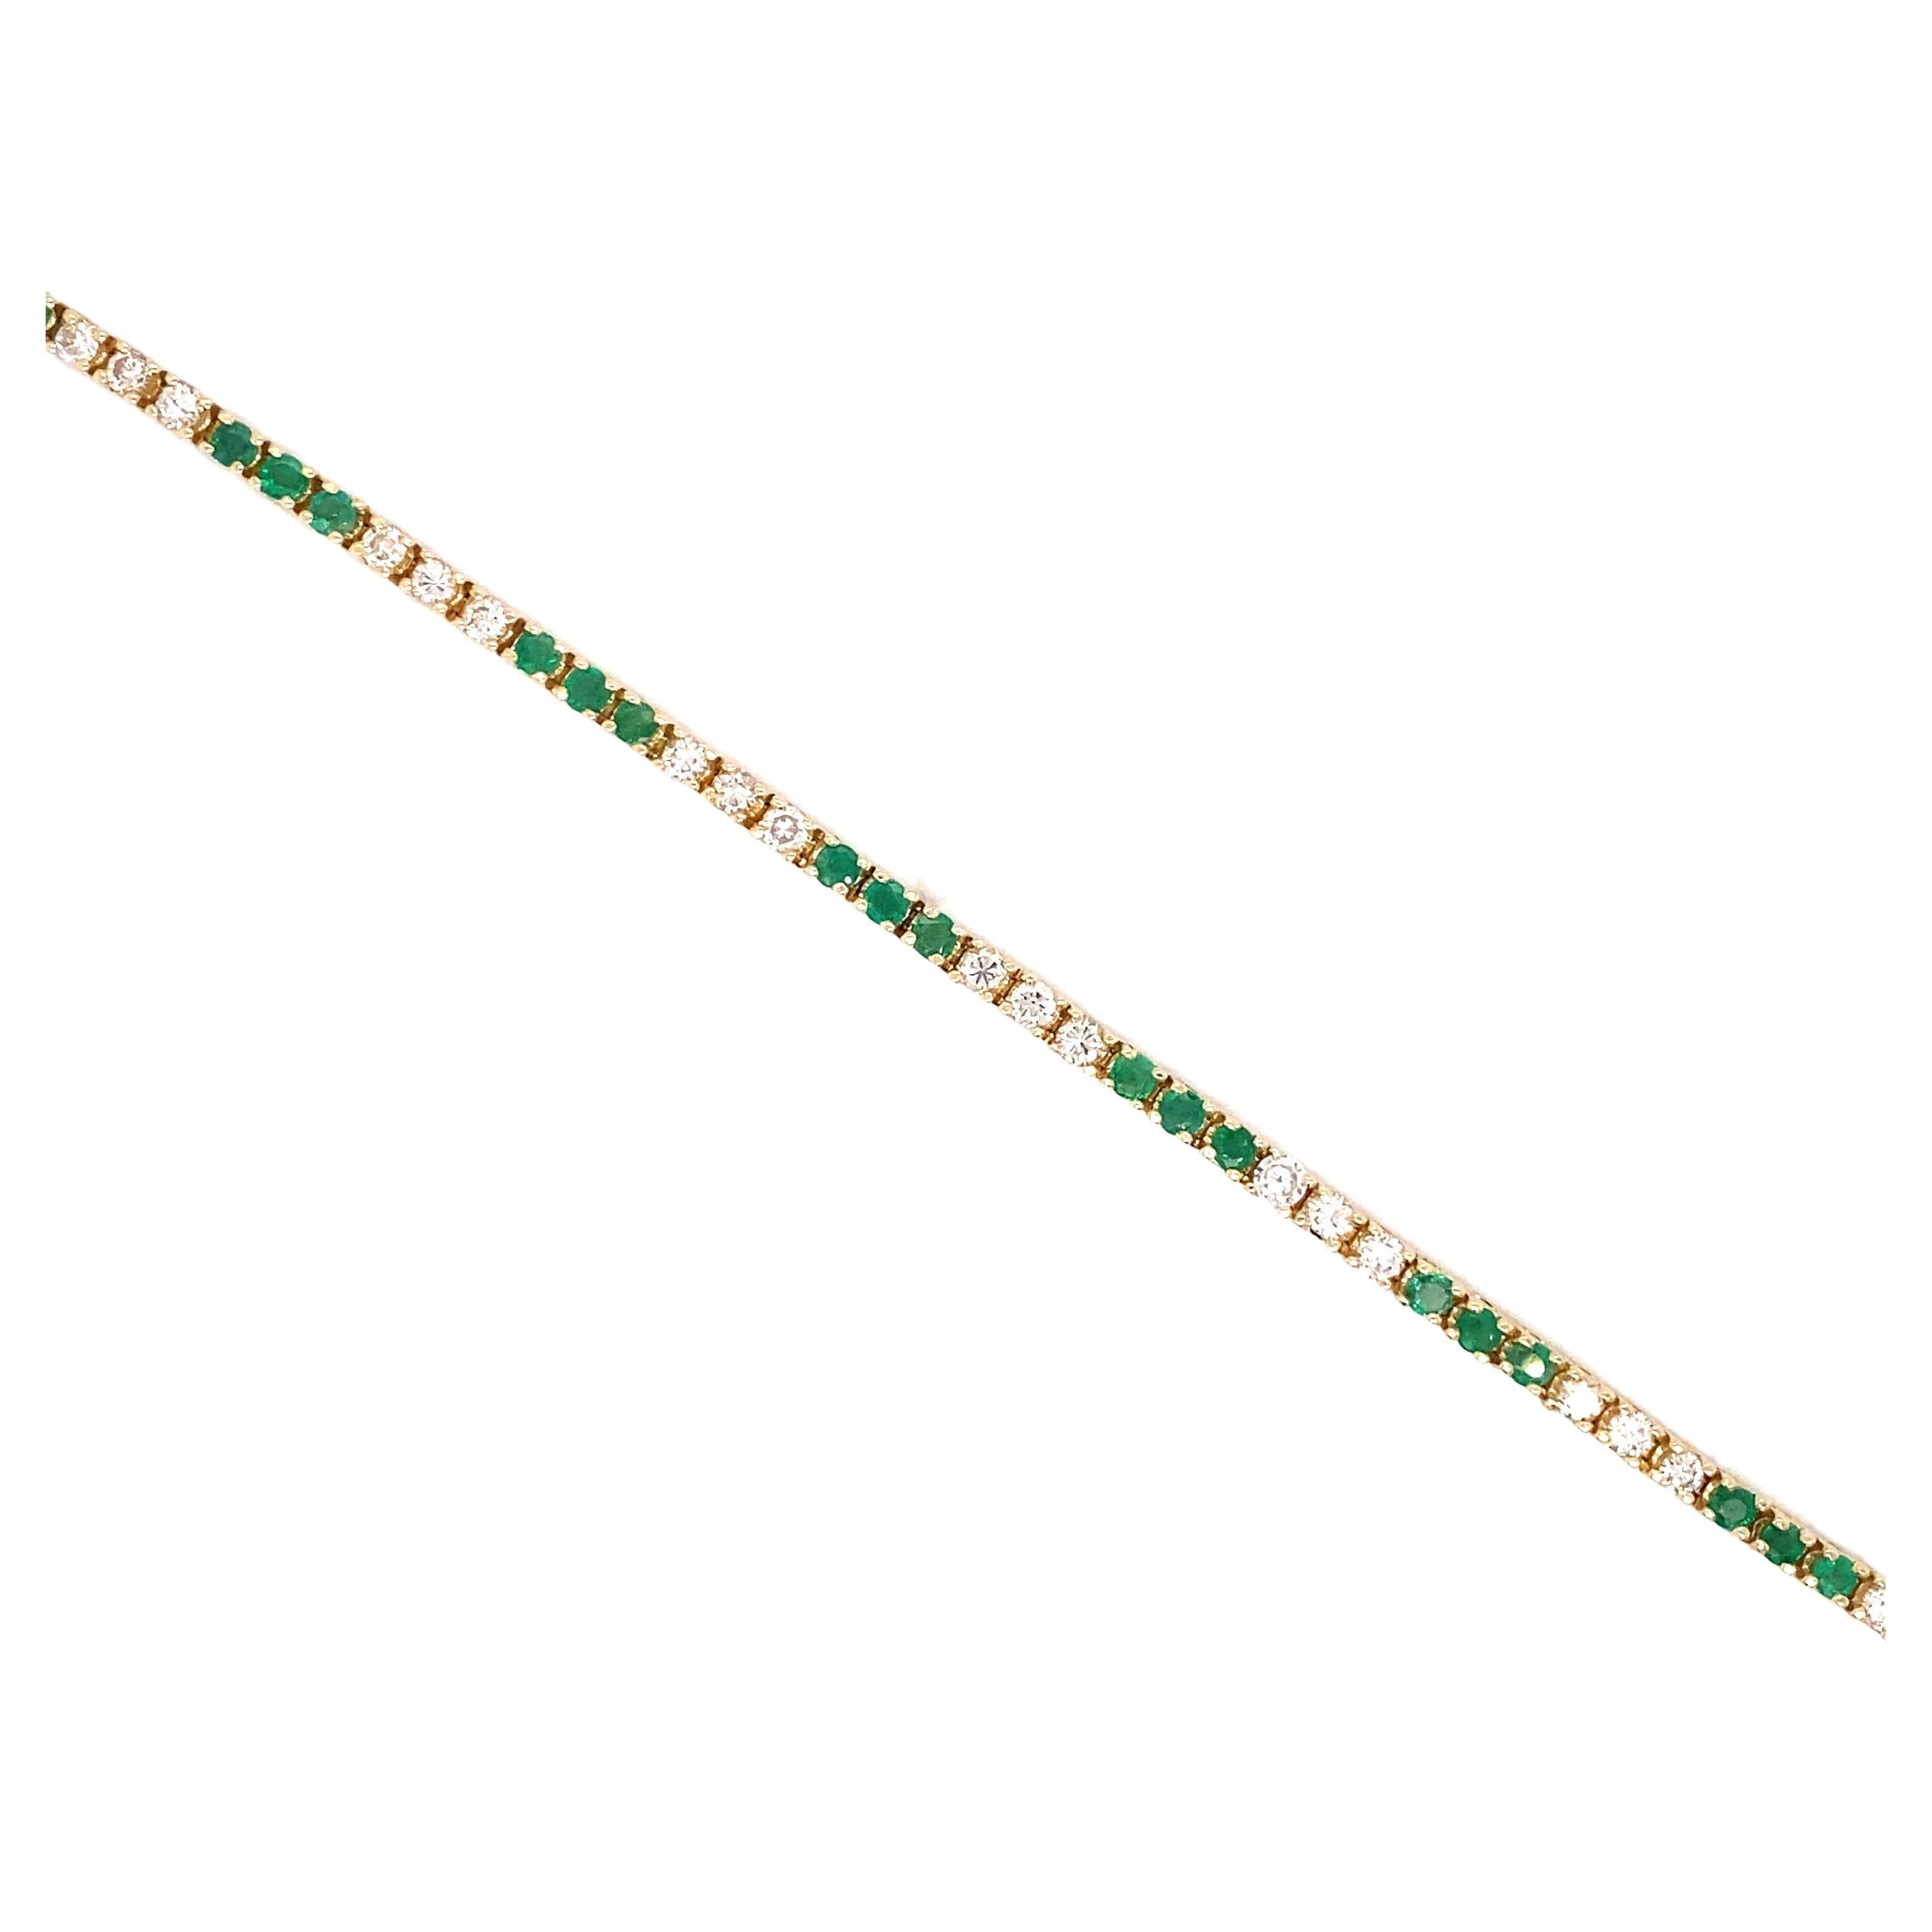 1 Carat Emerald and 1 Carat Diamond Tennis Bracelet in 14 Karat Gold For Sale